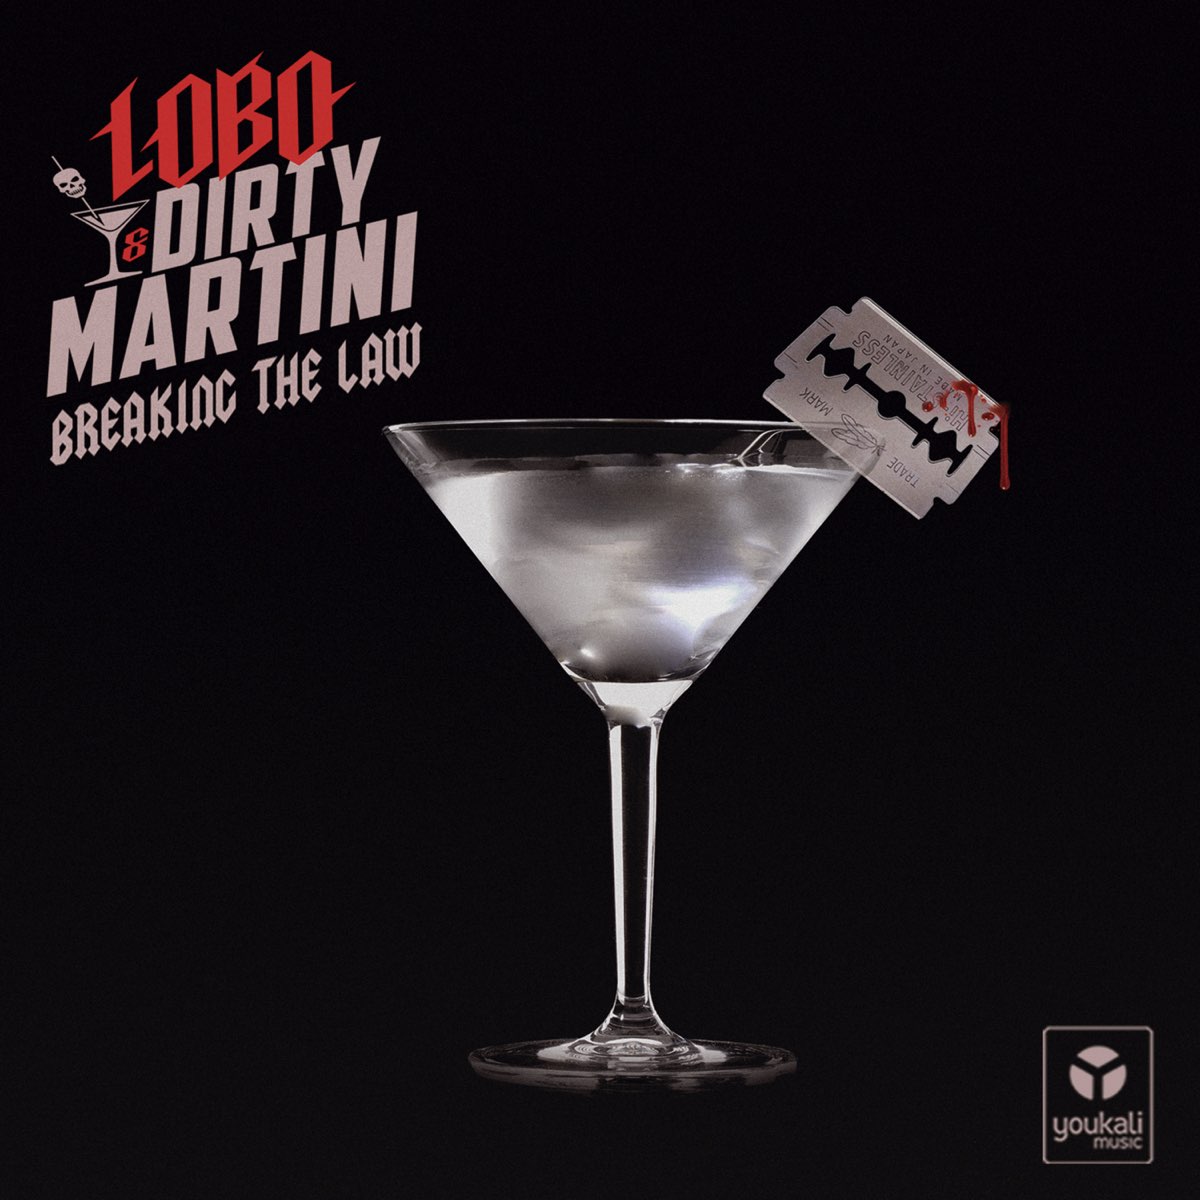 Breaking the Law - Single by Lobo & Dirty Martini.